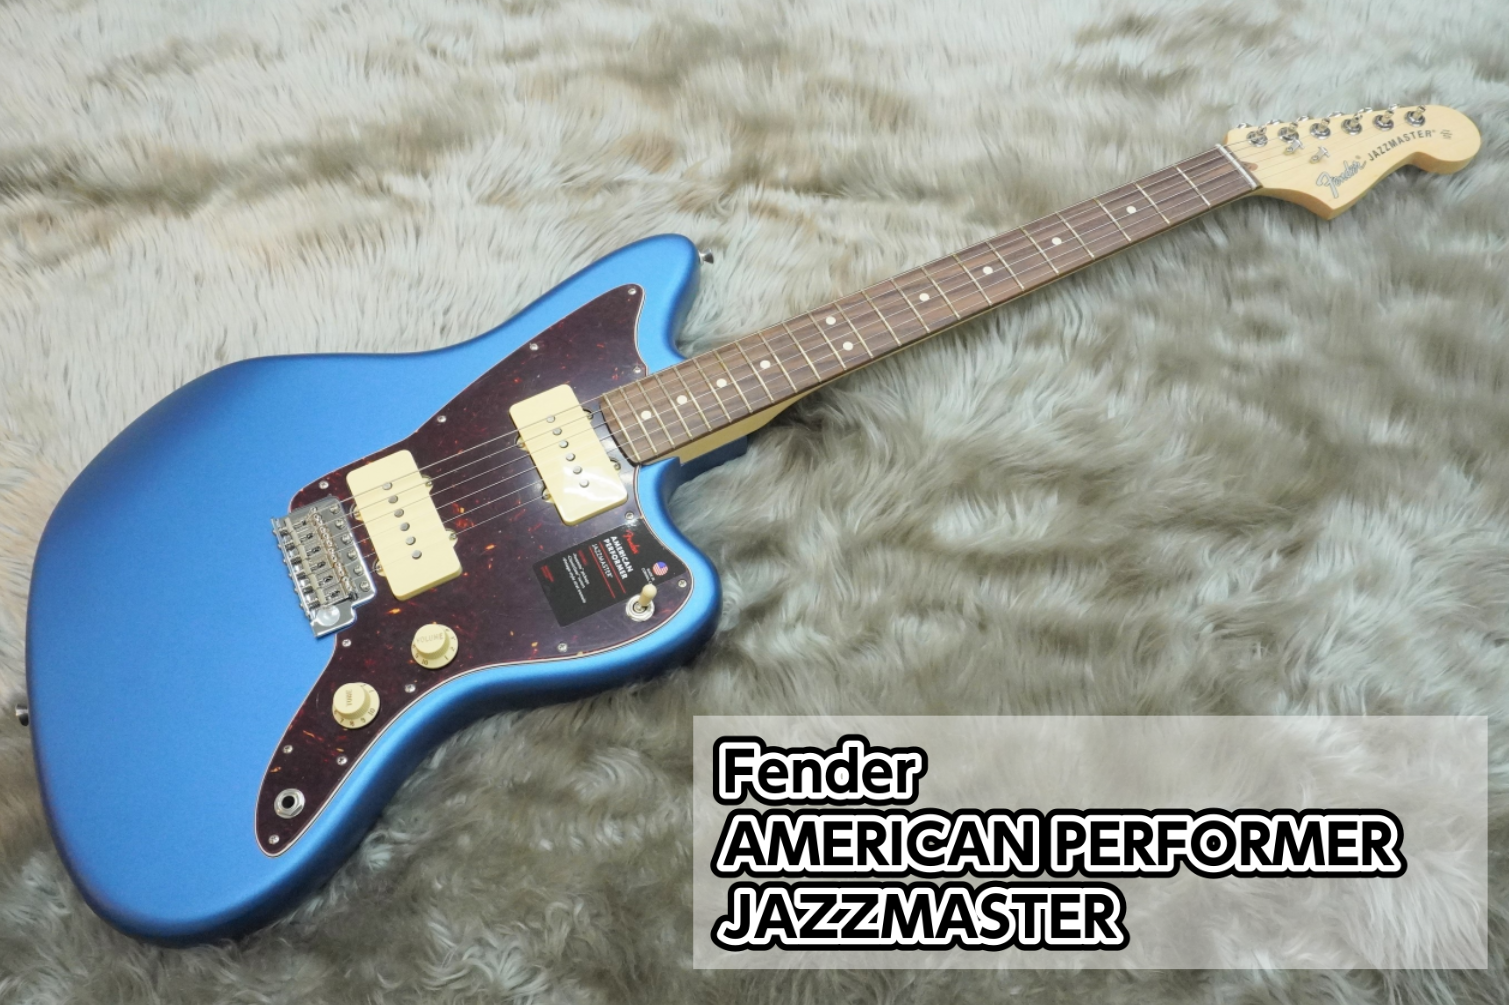 *Fender AMERICAN PERFORMER JAZZMASTER入荷のご案内 カリフォルニア州のコロナ工場で製造されるAmerican Performer Jazzmasterは、USA製フェンダーならではのオーセンティックなトーンとフィーリングを提供し、パフォーマンスにインスピレーション […]